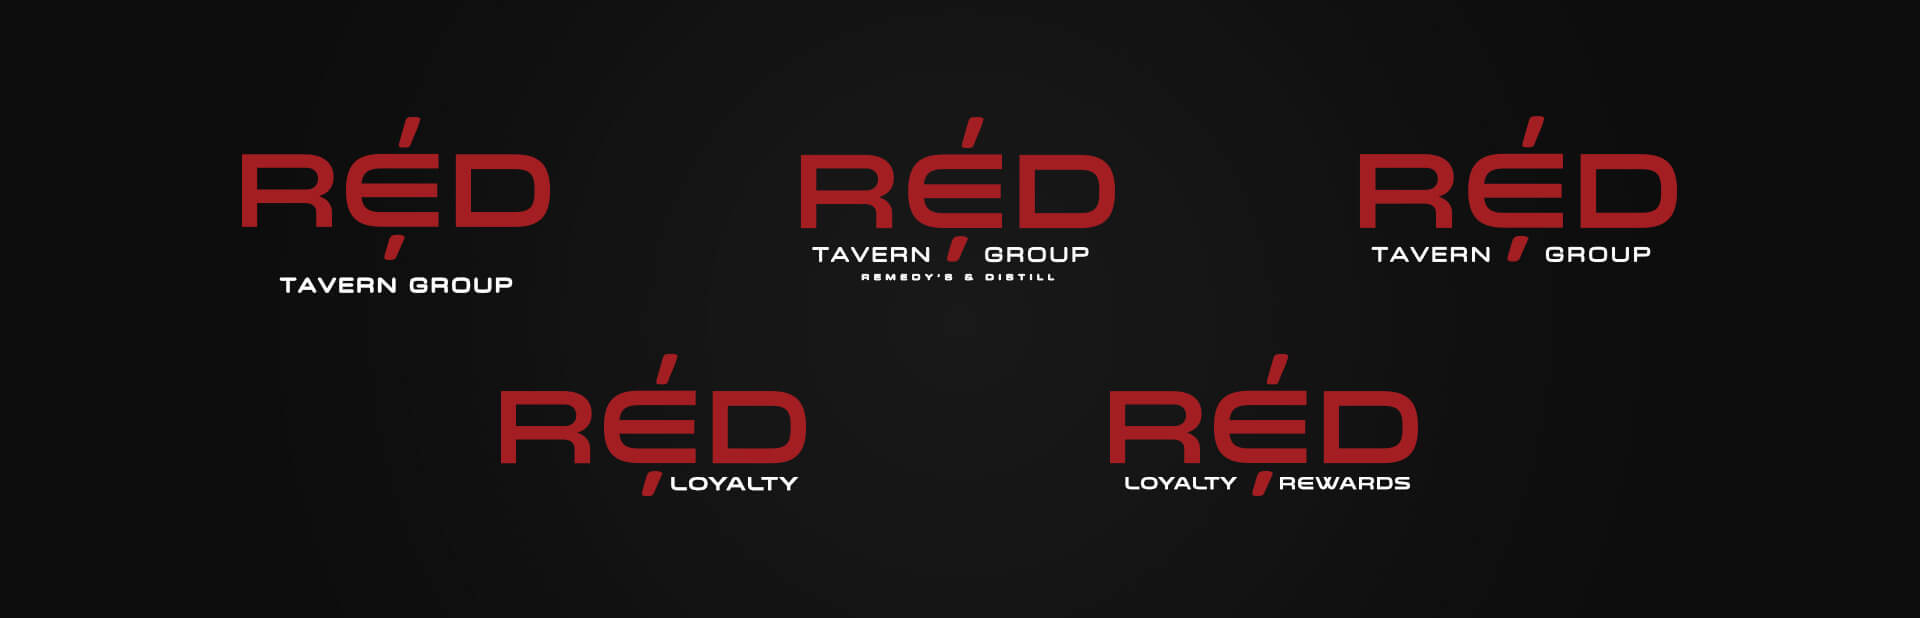 R&D Tavern Group logo variants